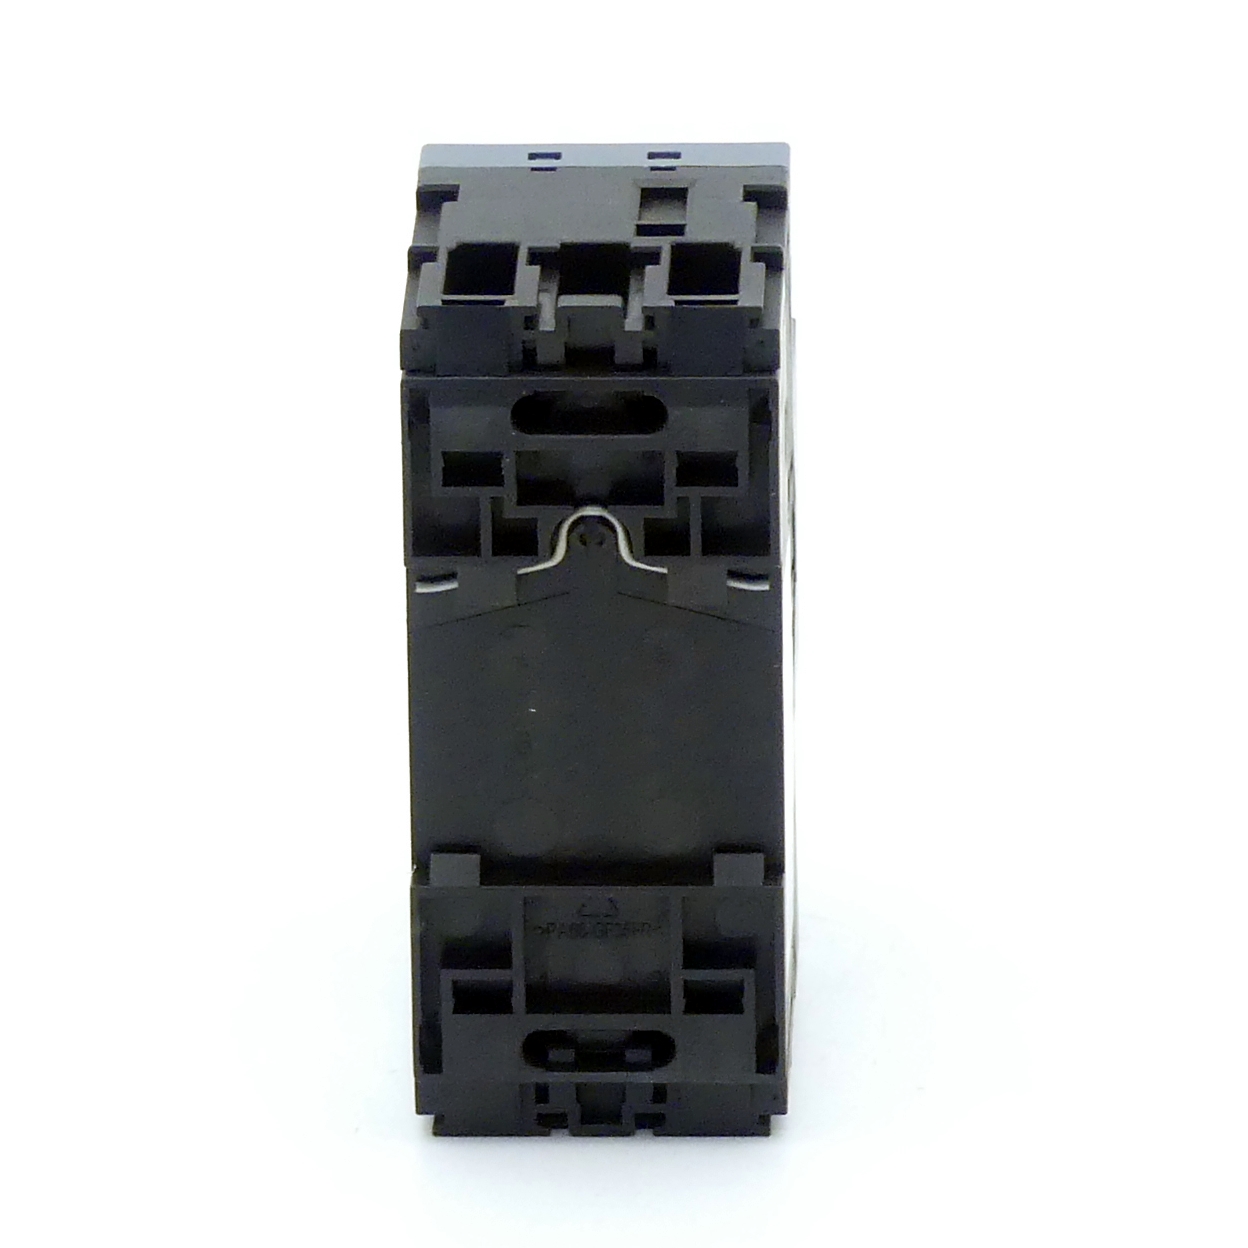 Circuit breaker 3RV2411-4AA20 